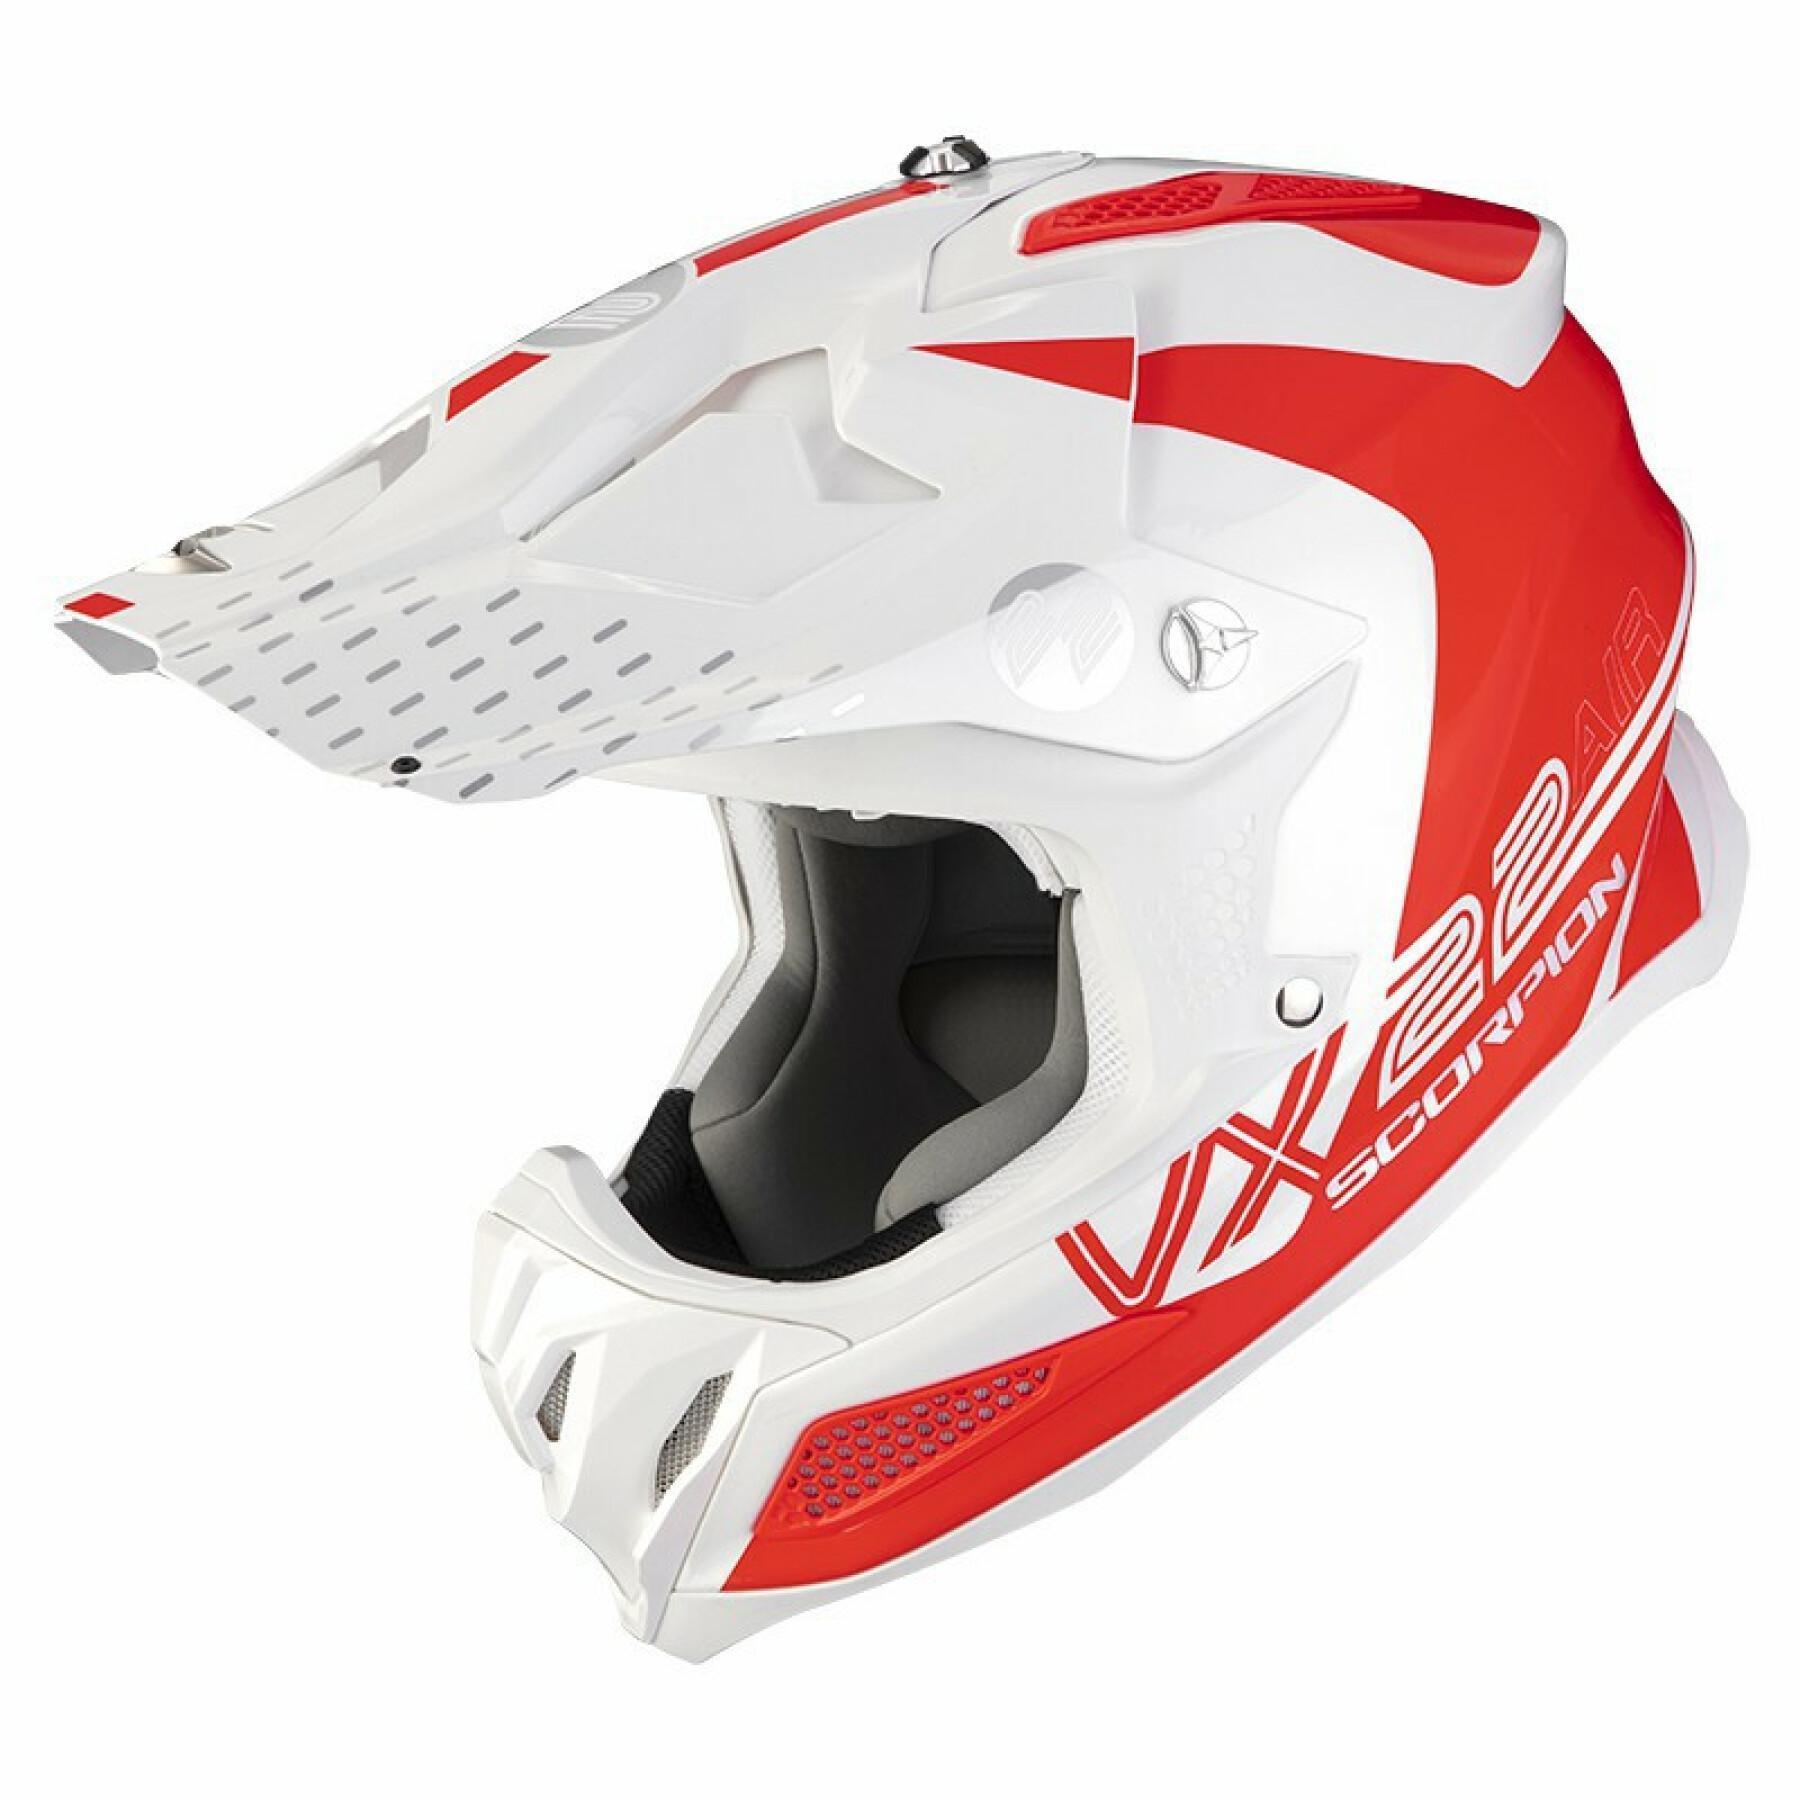 Visera de casco de moto Scorpion vx-22 PEAK ARES